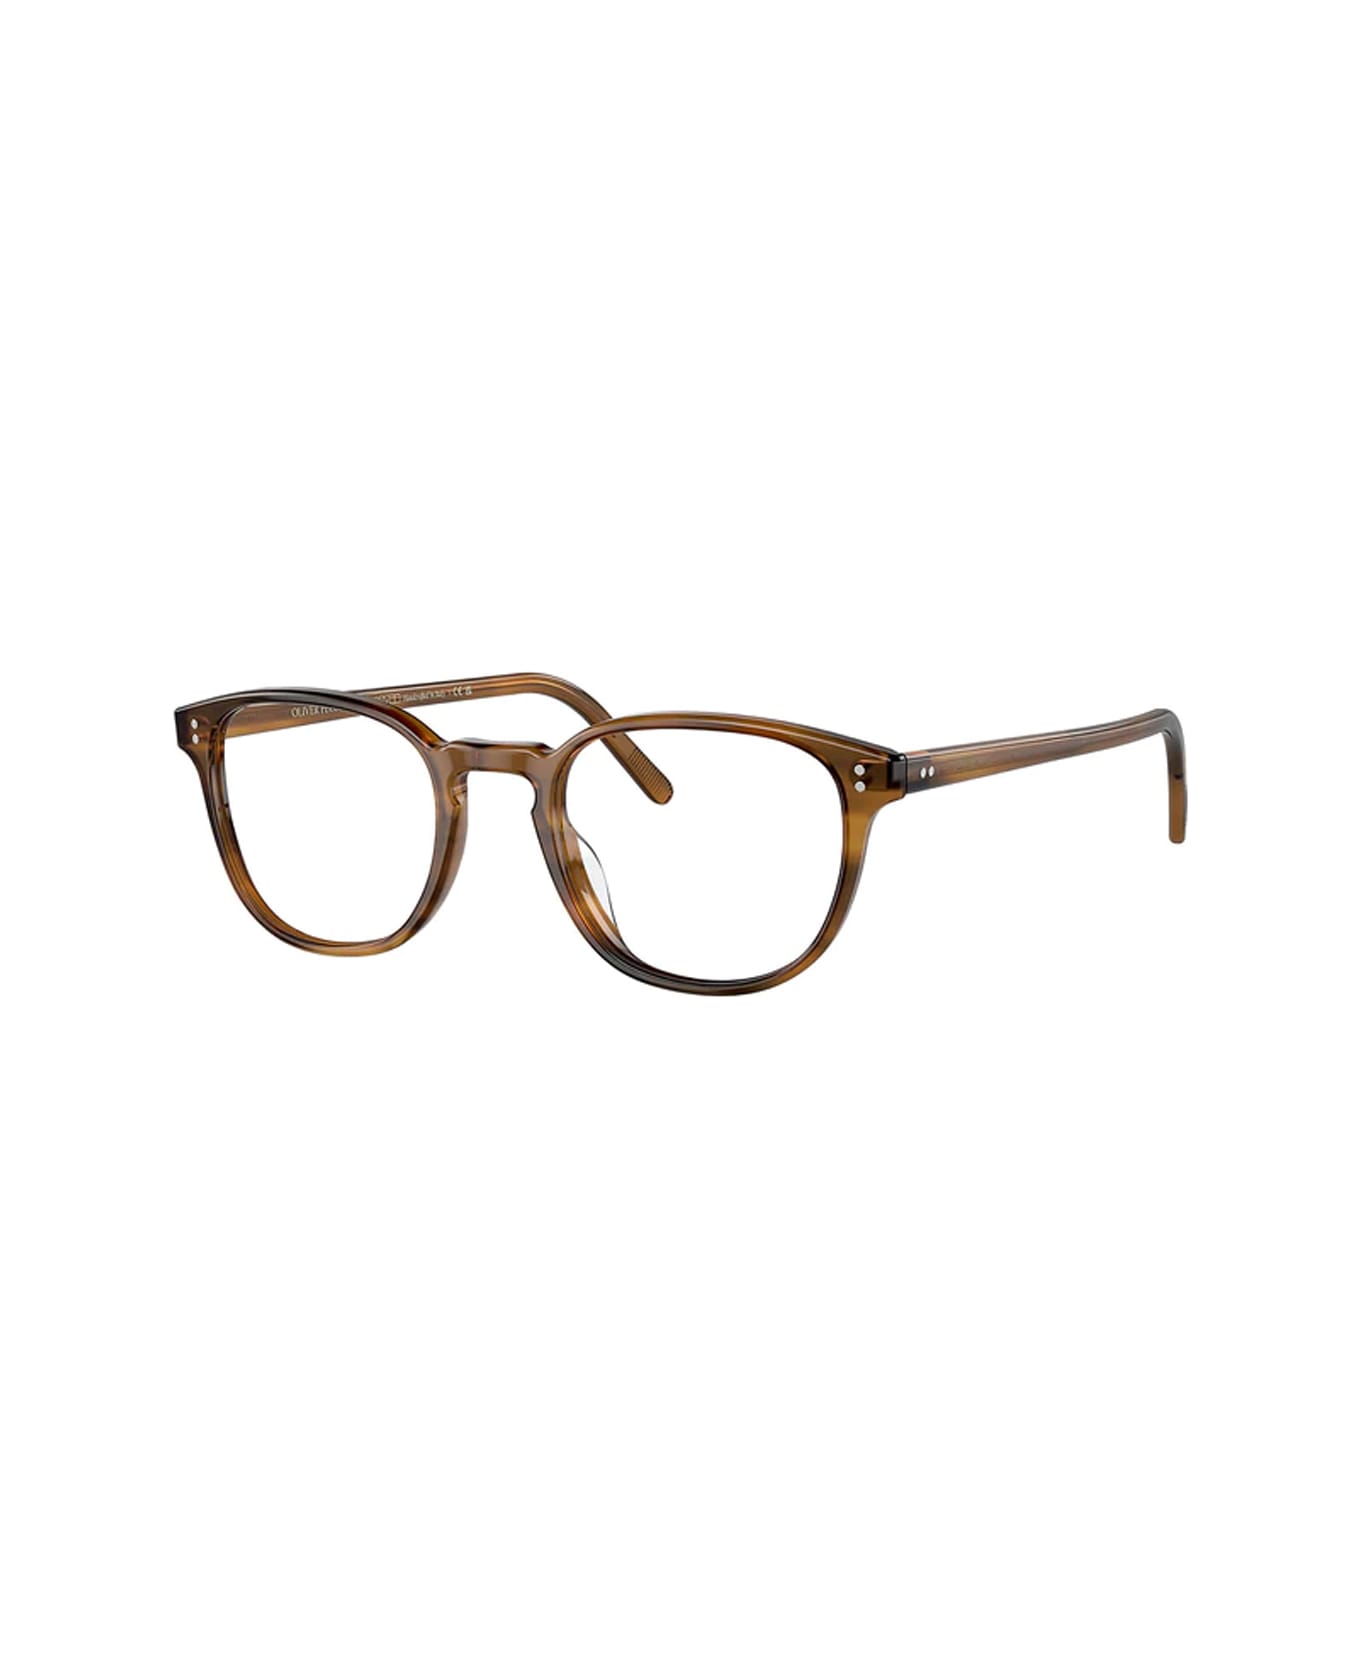 Oliver Peoples Ov5219 - Fairmont 1011 Glasses - Marrone